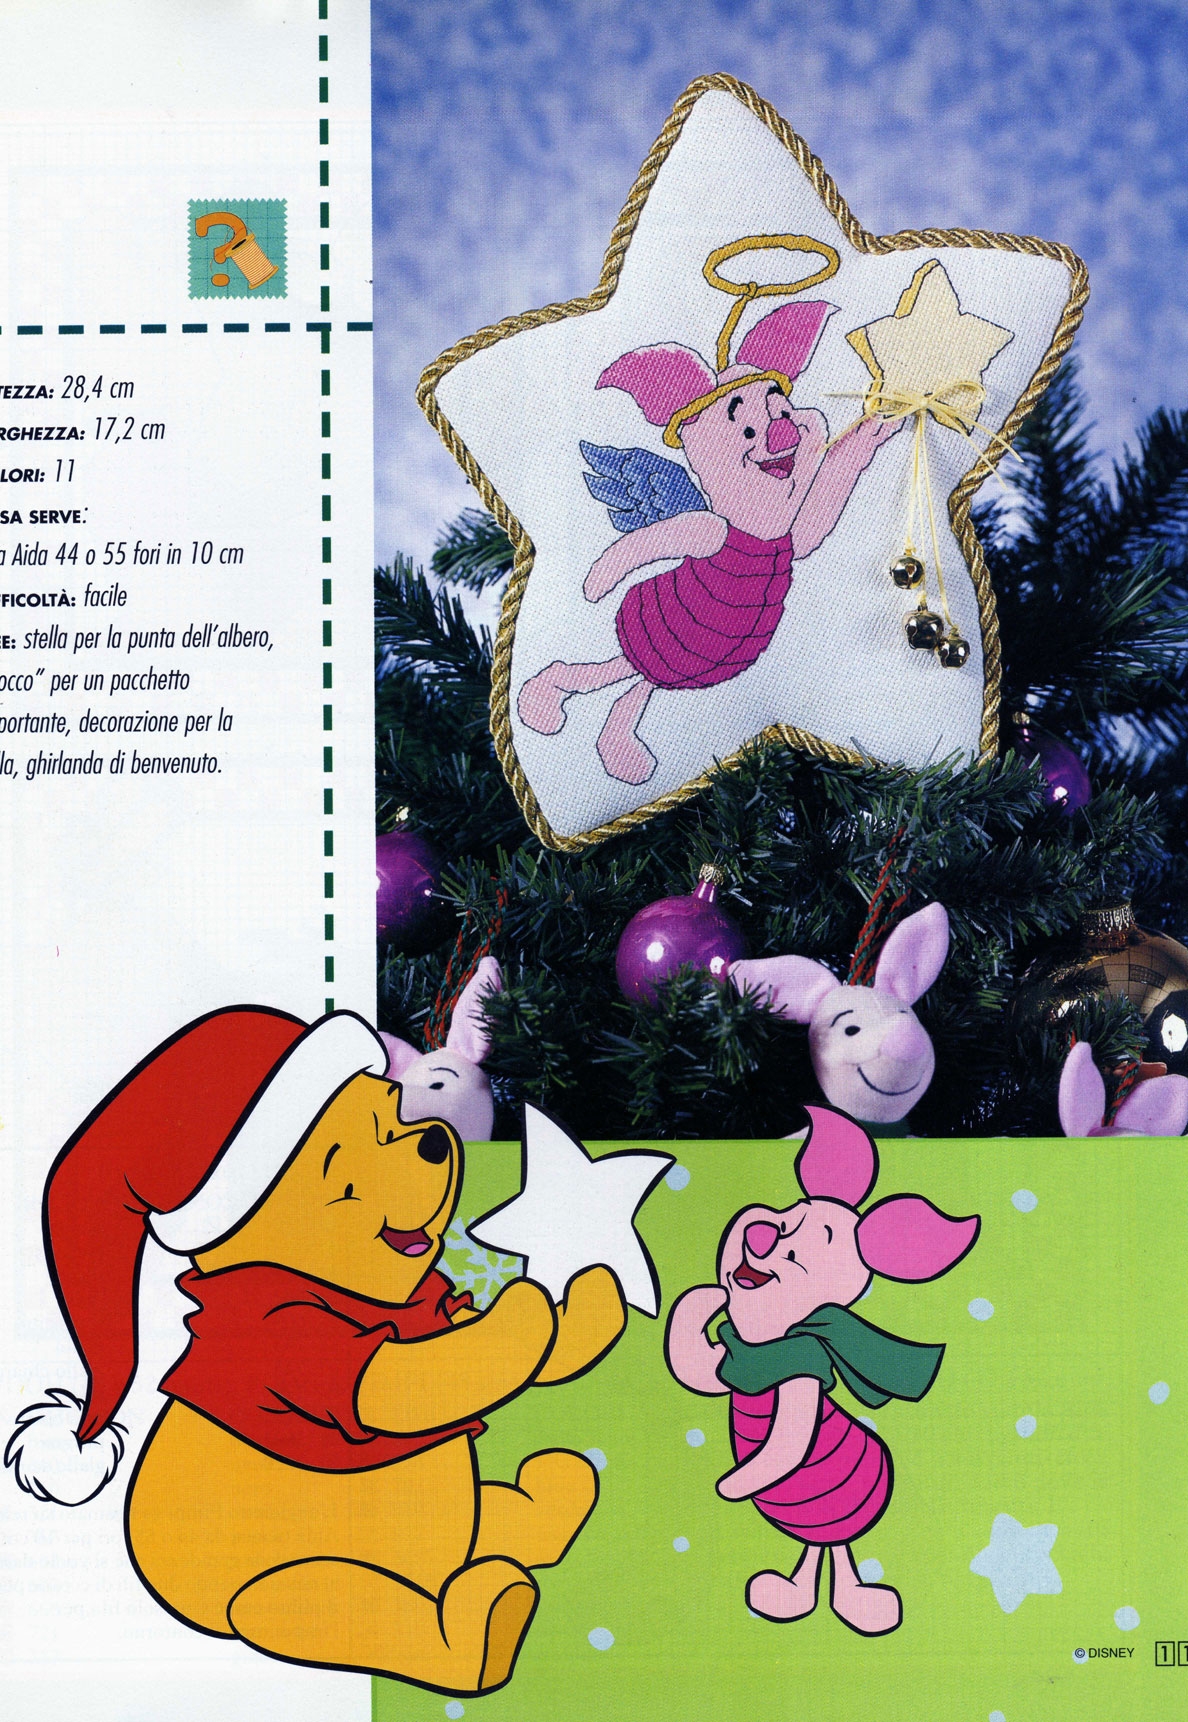 Piglet winnie the pooh christmas tree star tip (1)